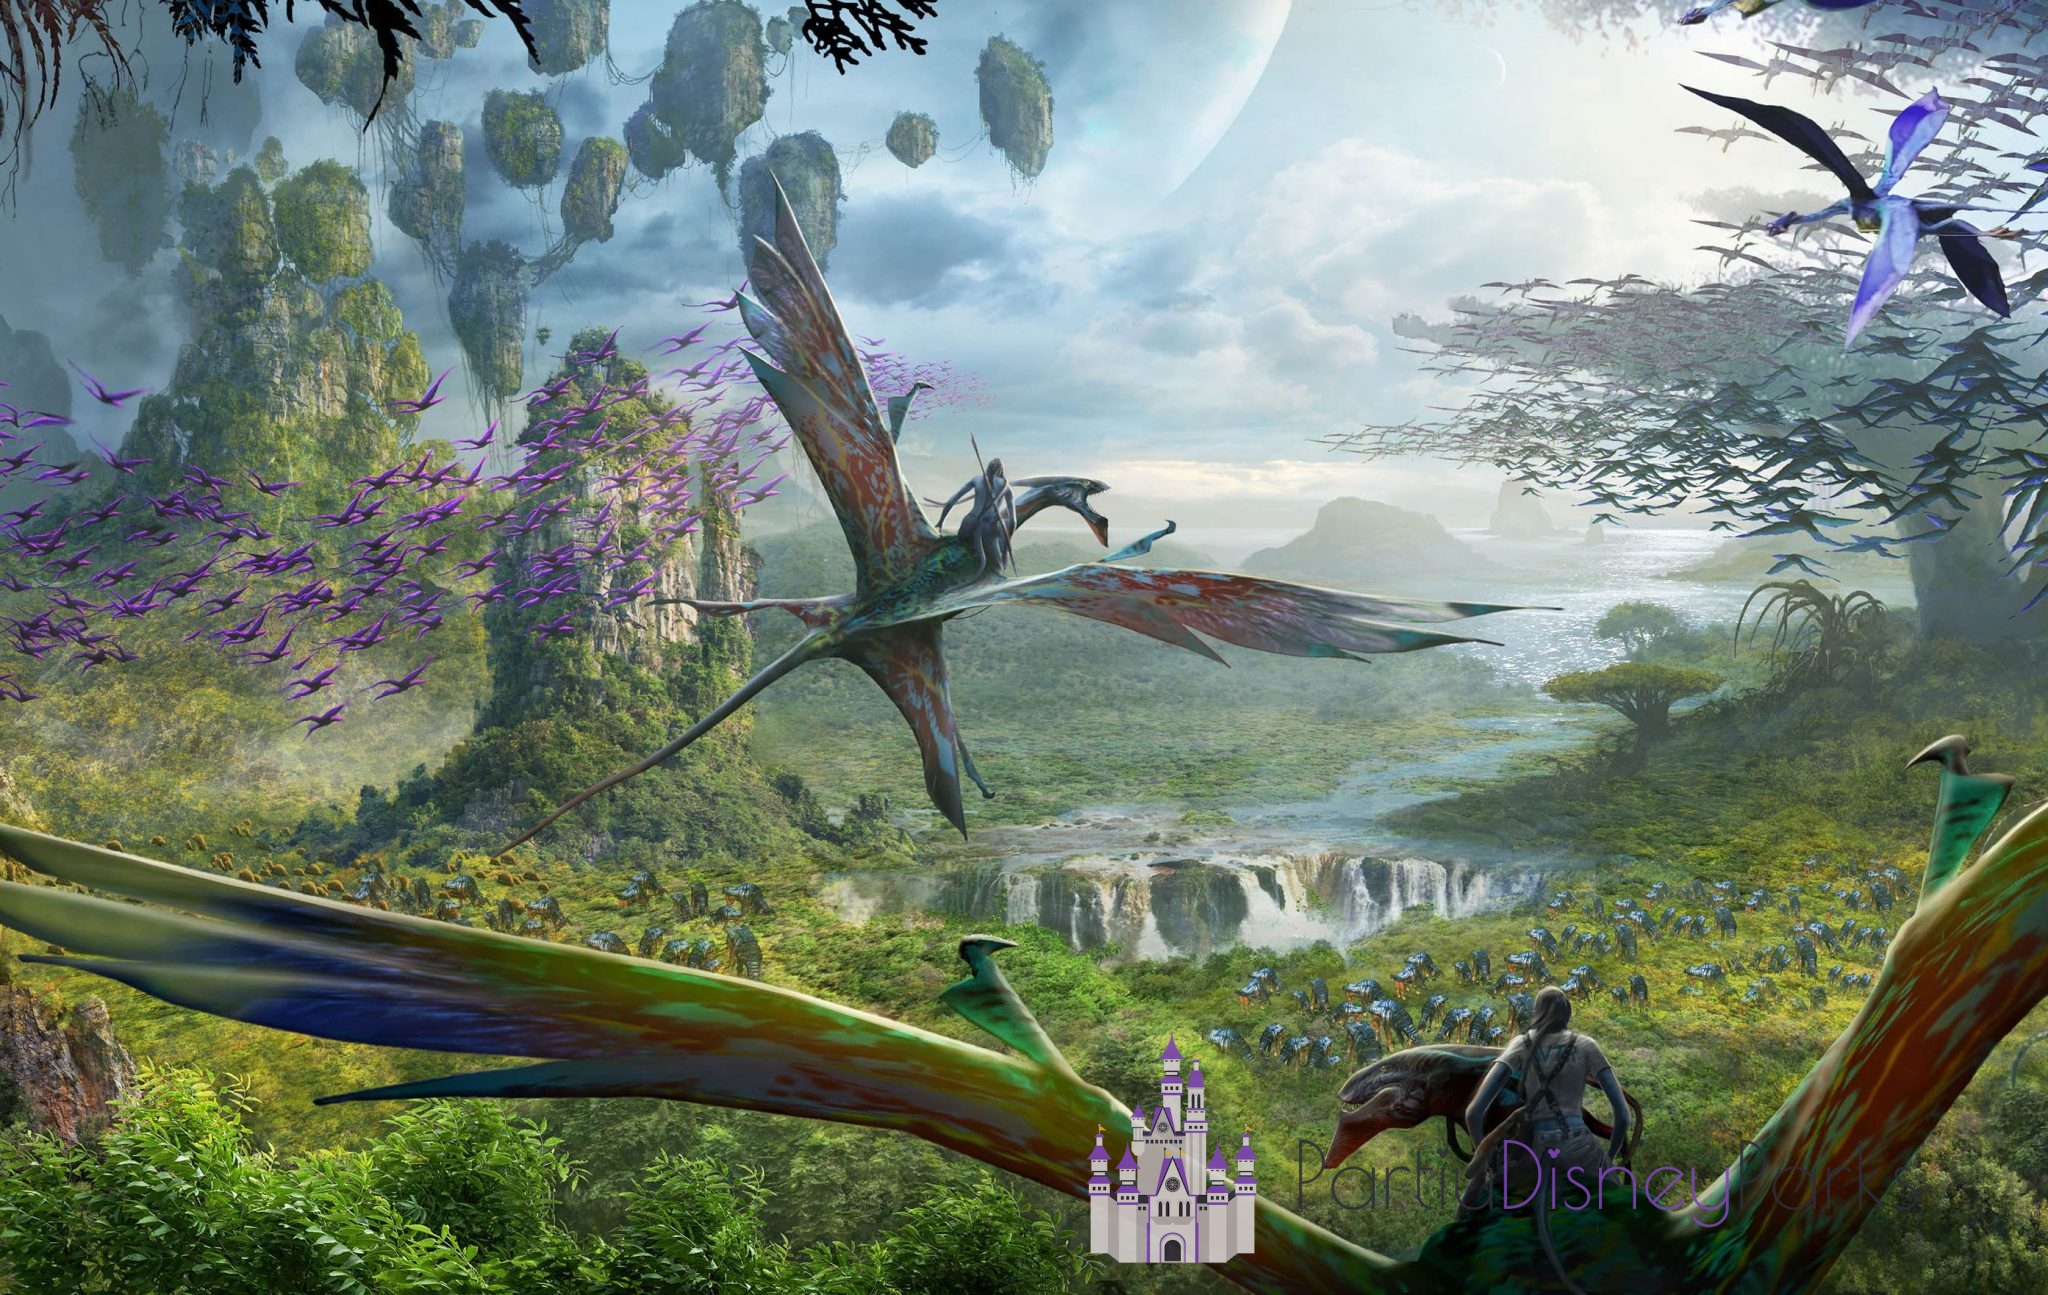 Avatar Flight of Passage attraction on Pandora at Animal Kingdom